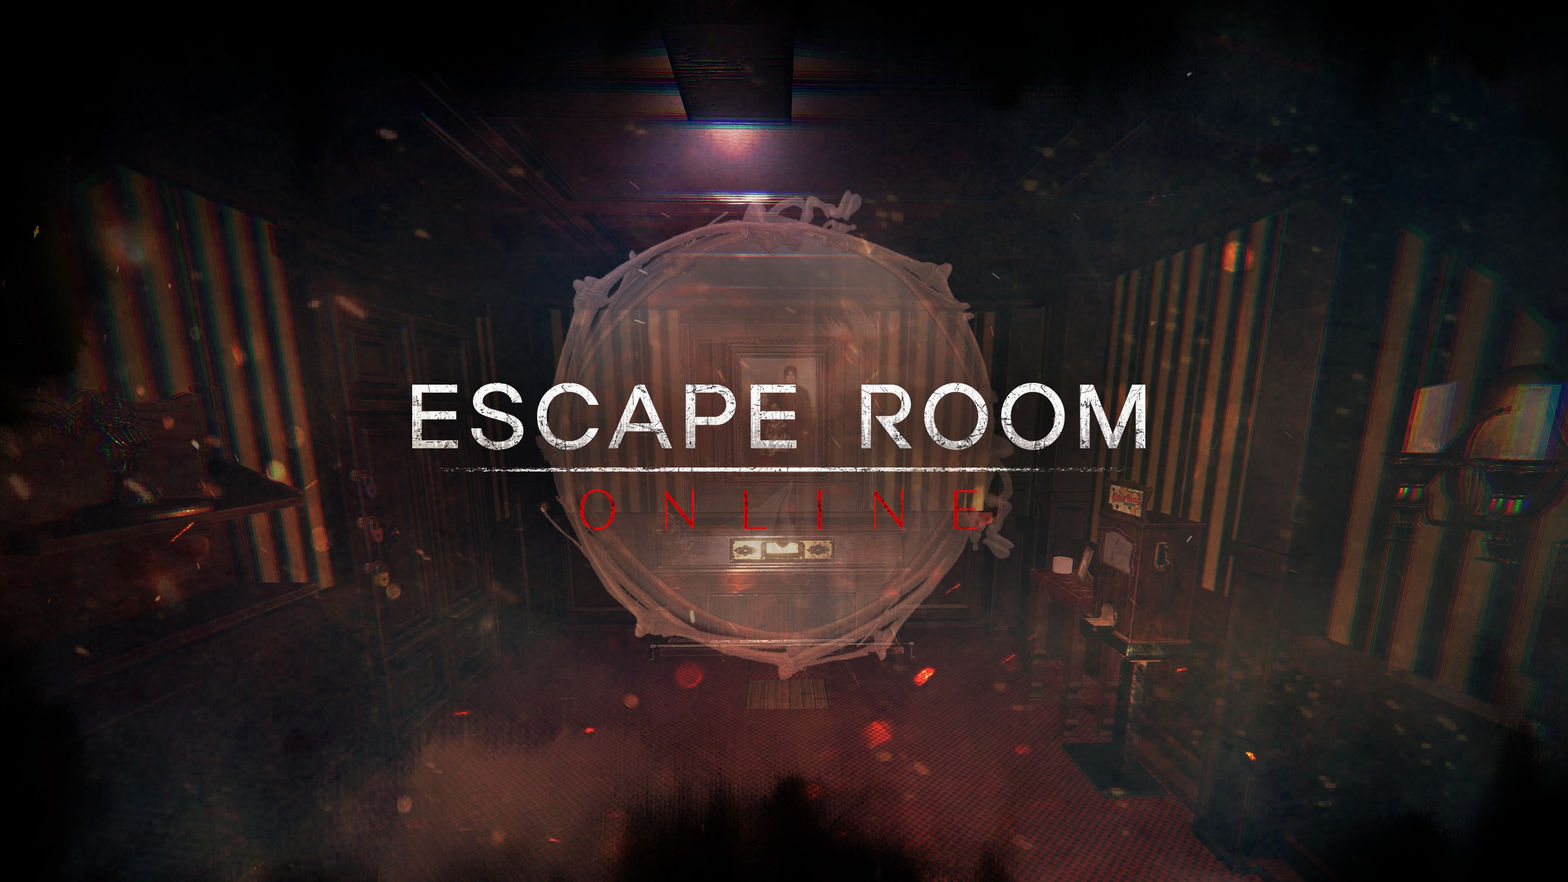 Escape Room Online